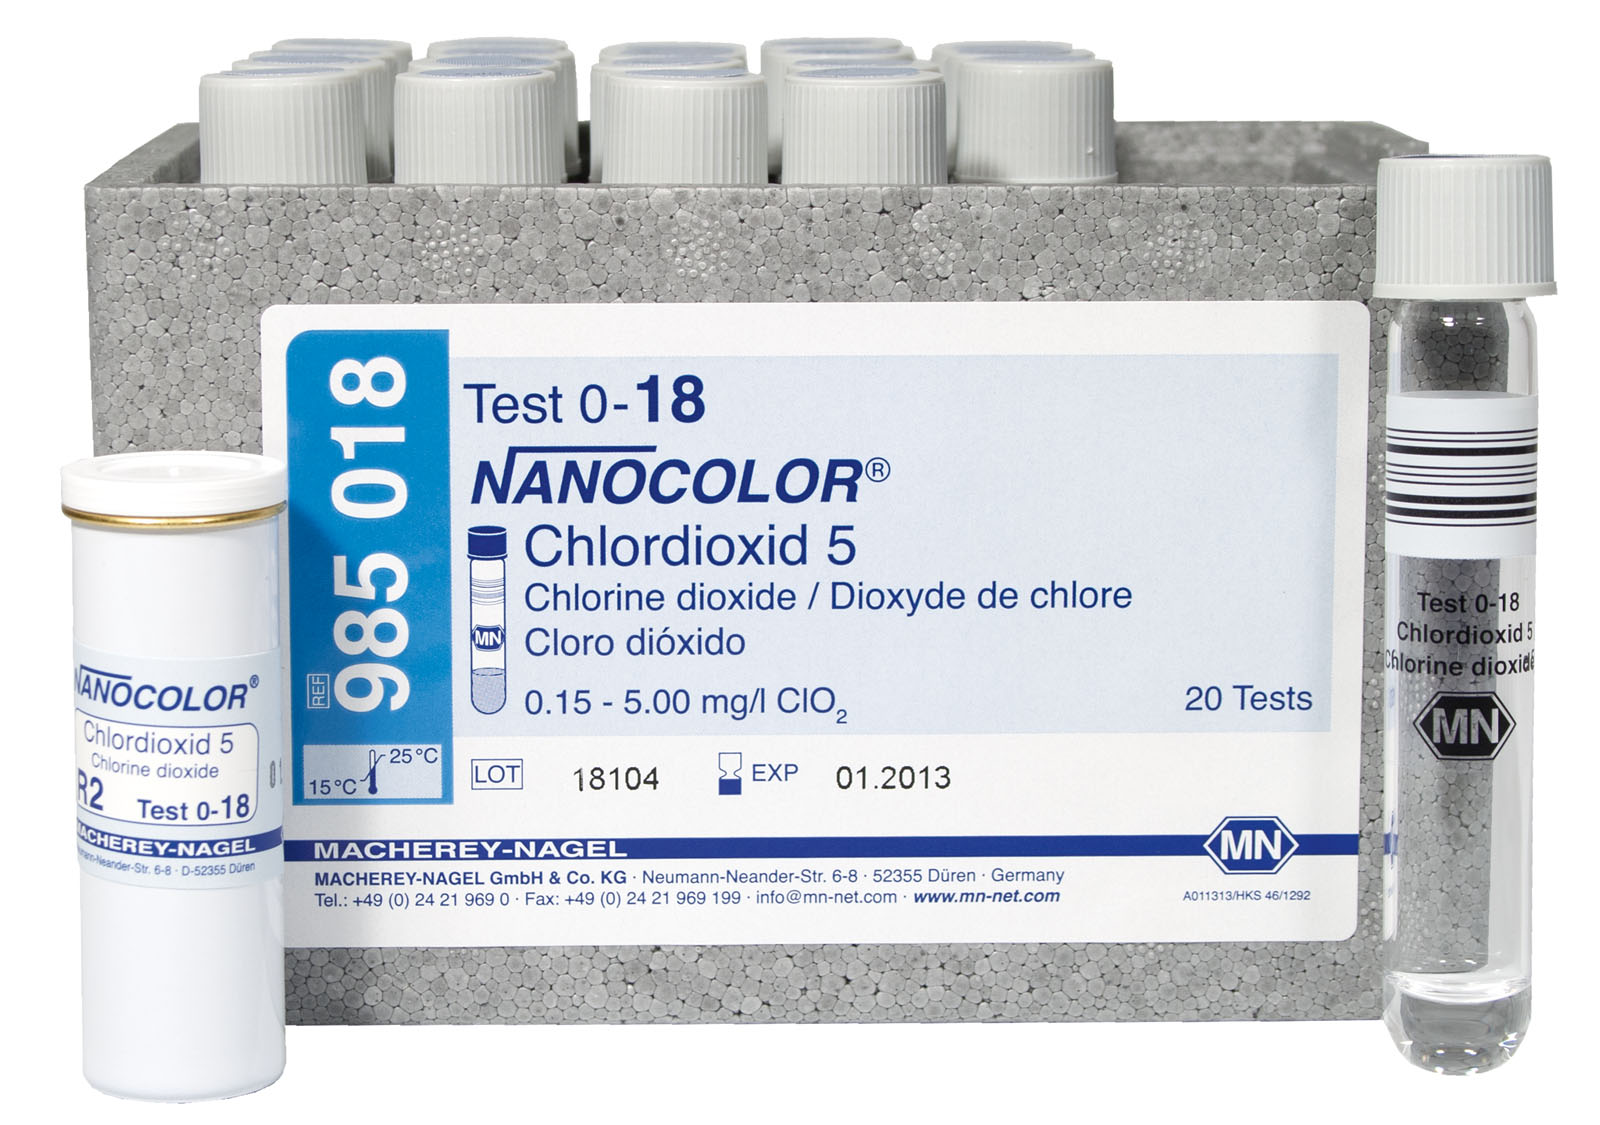 RUK NANOCOLOR-  Chlordioxid 5 Test